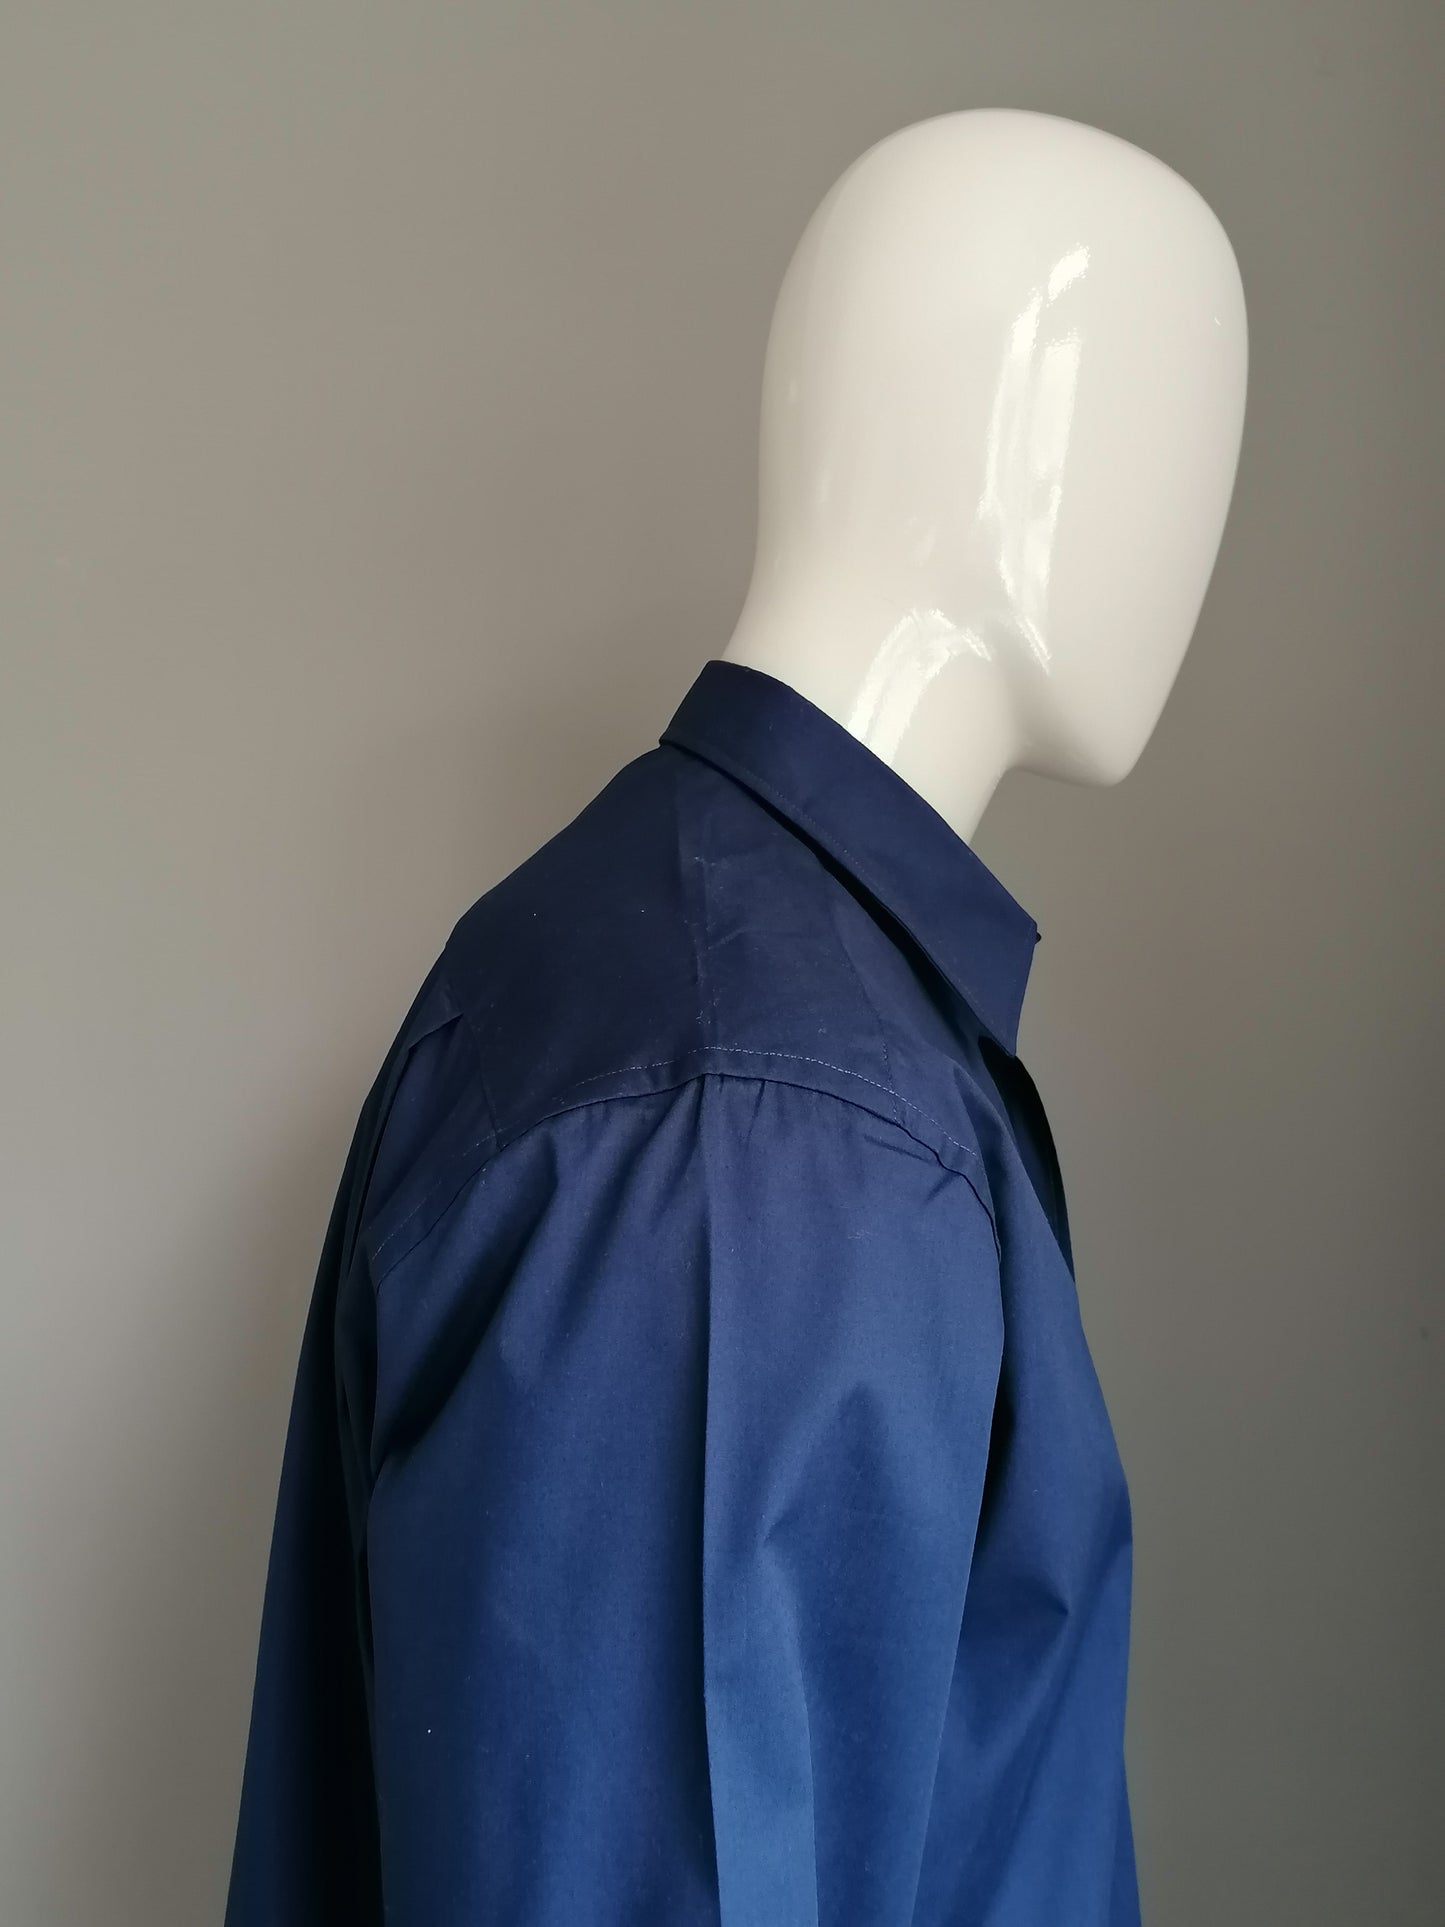 Pierre Cardin shirt. Dark blue colored. Size XXL / 2XL. New! Regular fit.